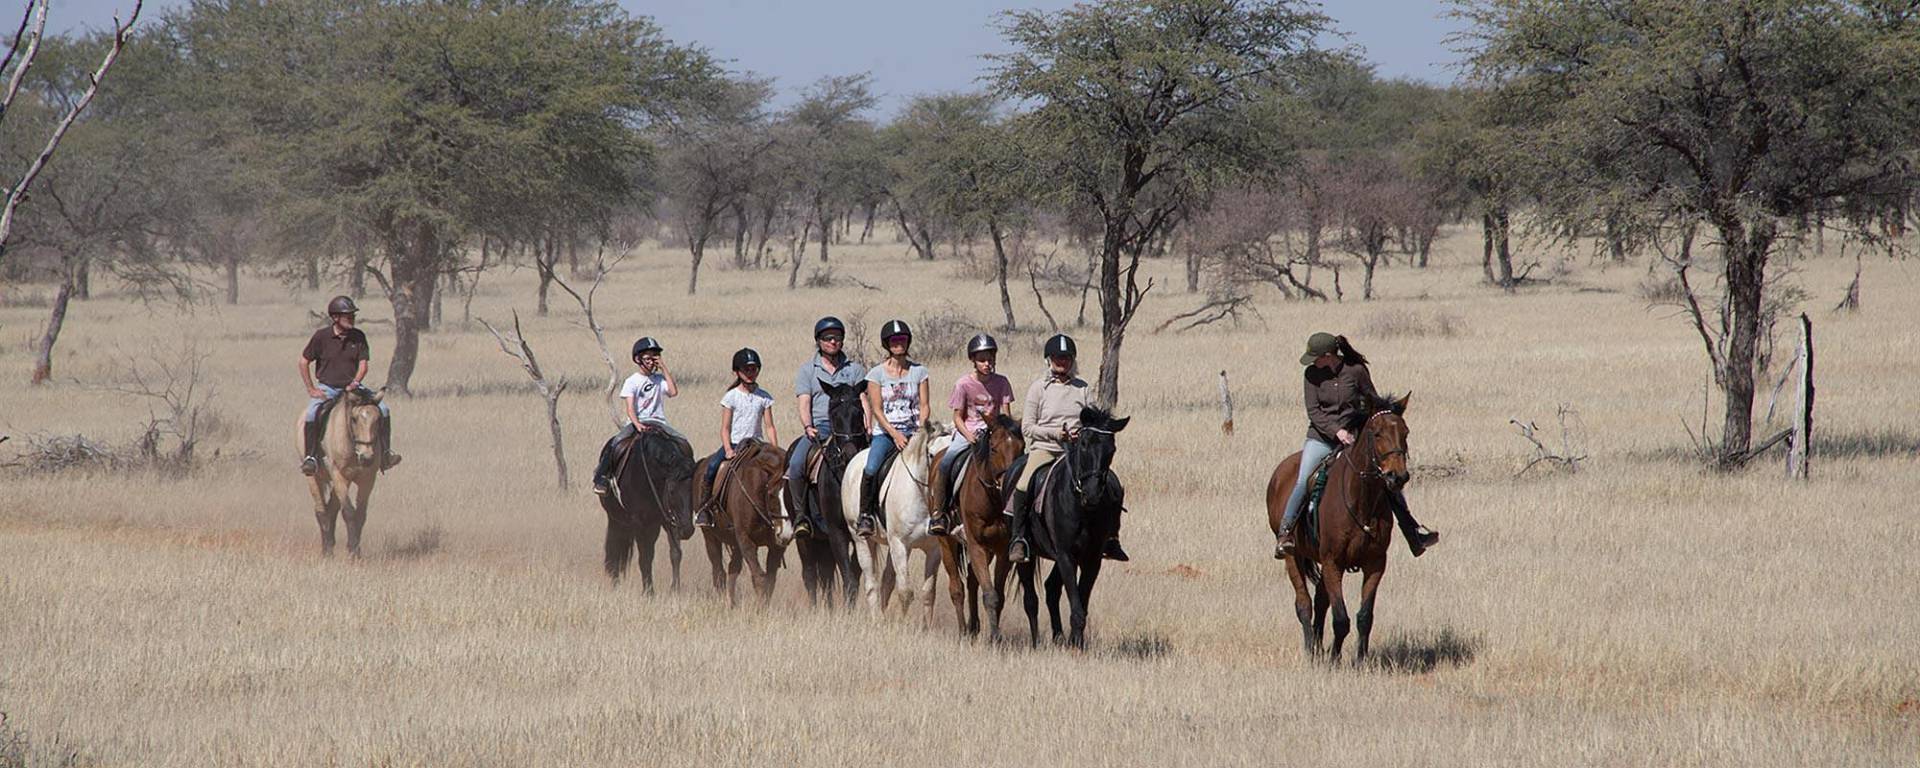 Kalahari horse riding for young and old